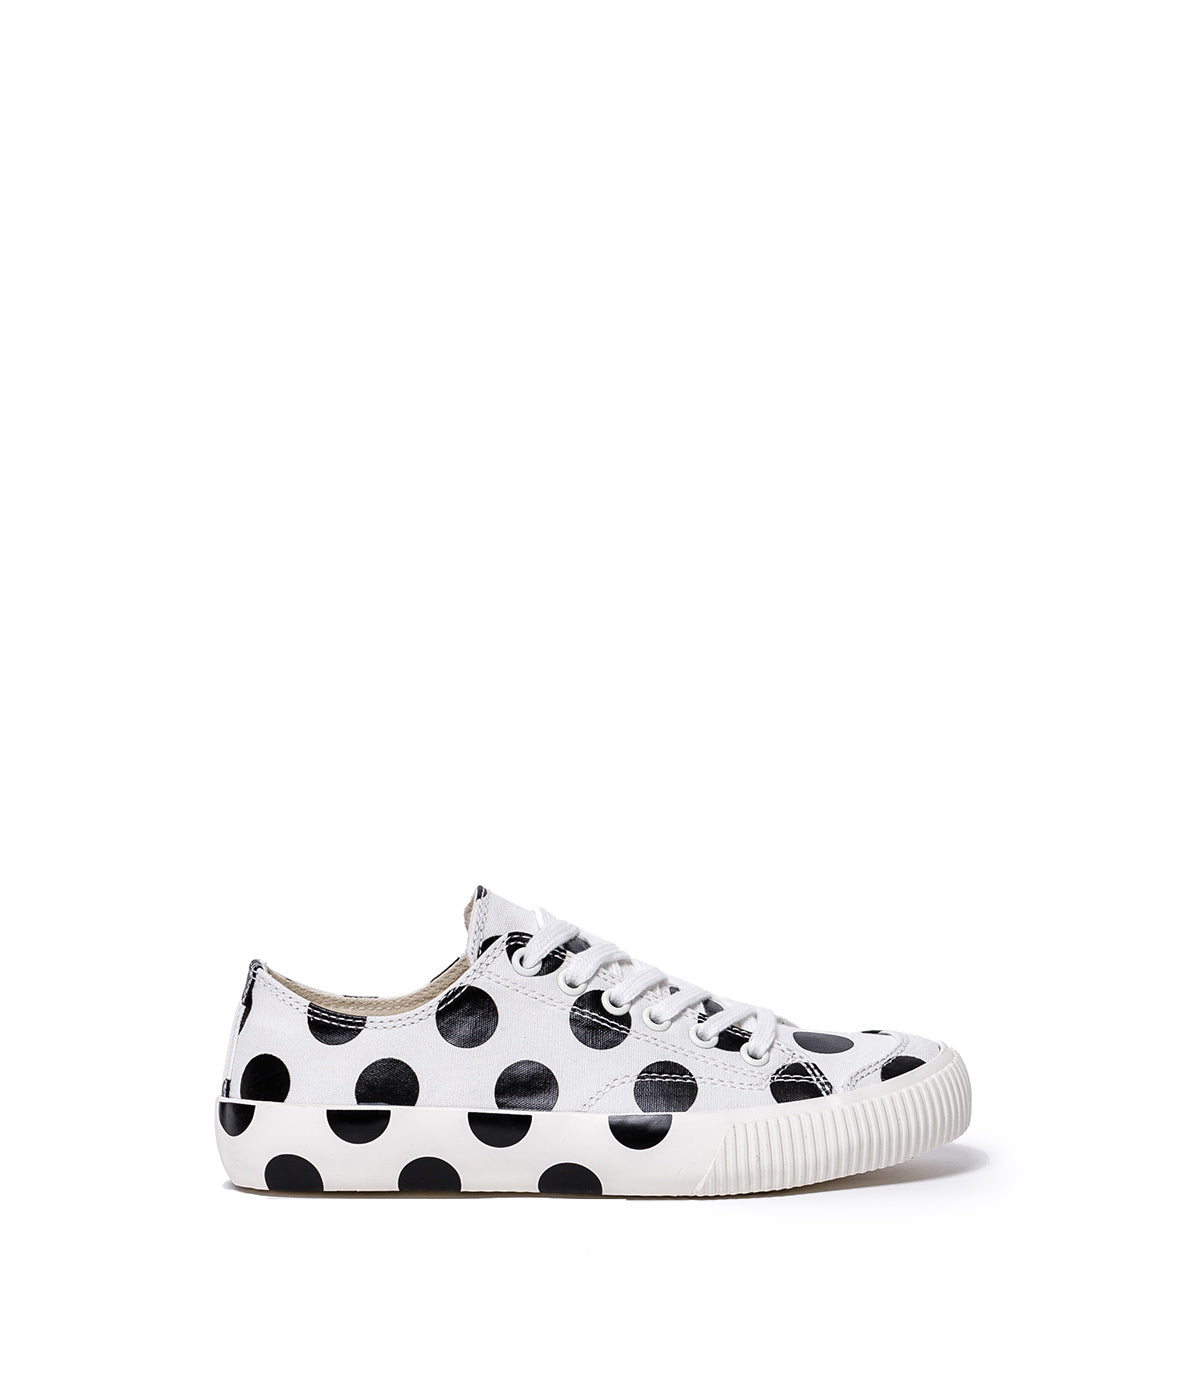 black and white polka dot sneakers